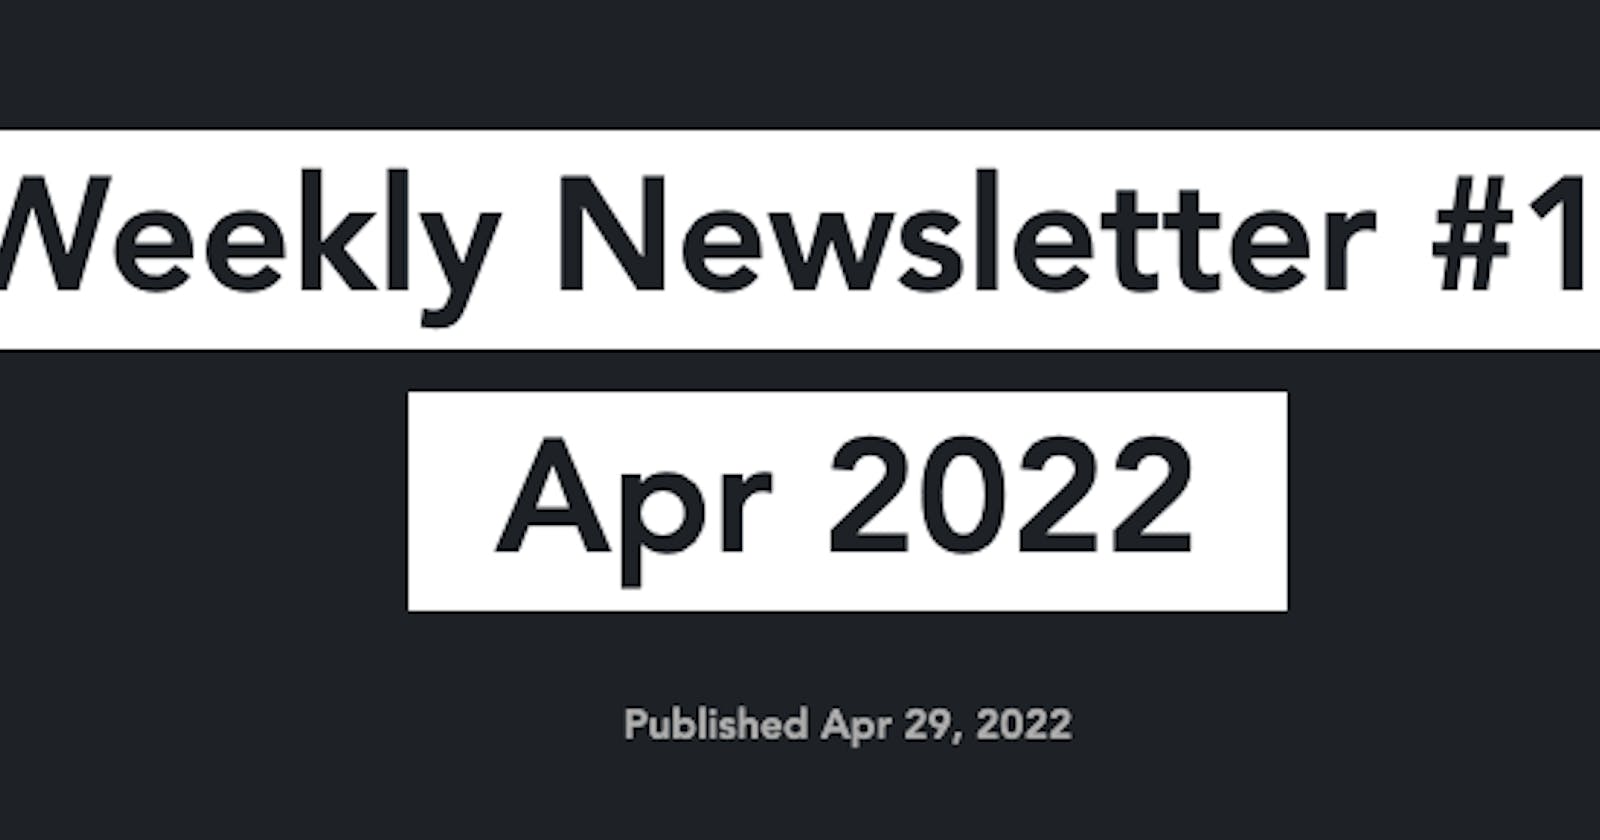 📰 Weekly Newsletter #1 - 29 Apr 2022